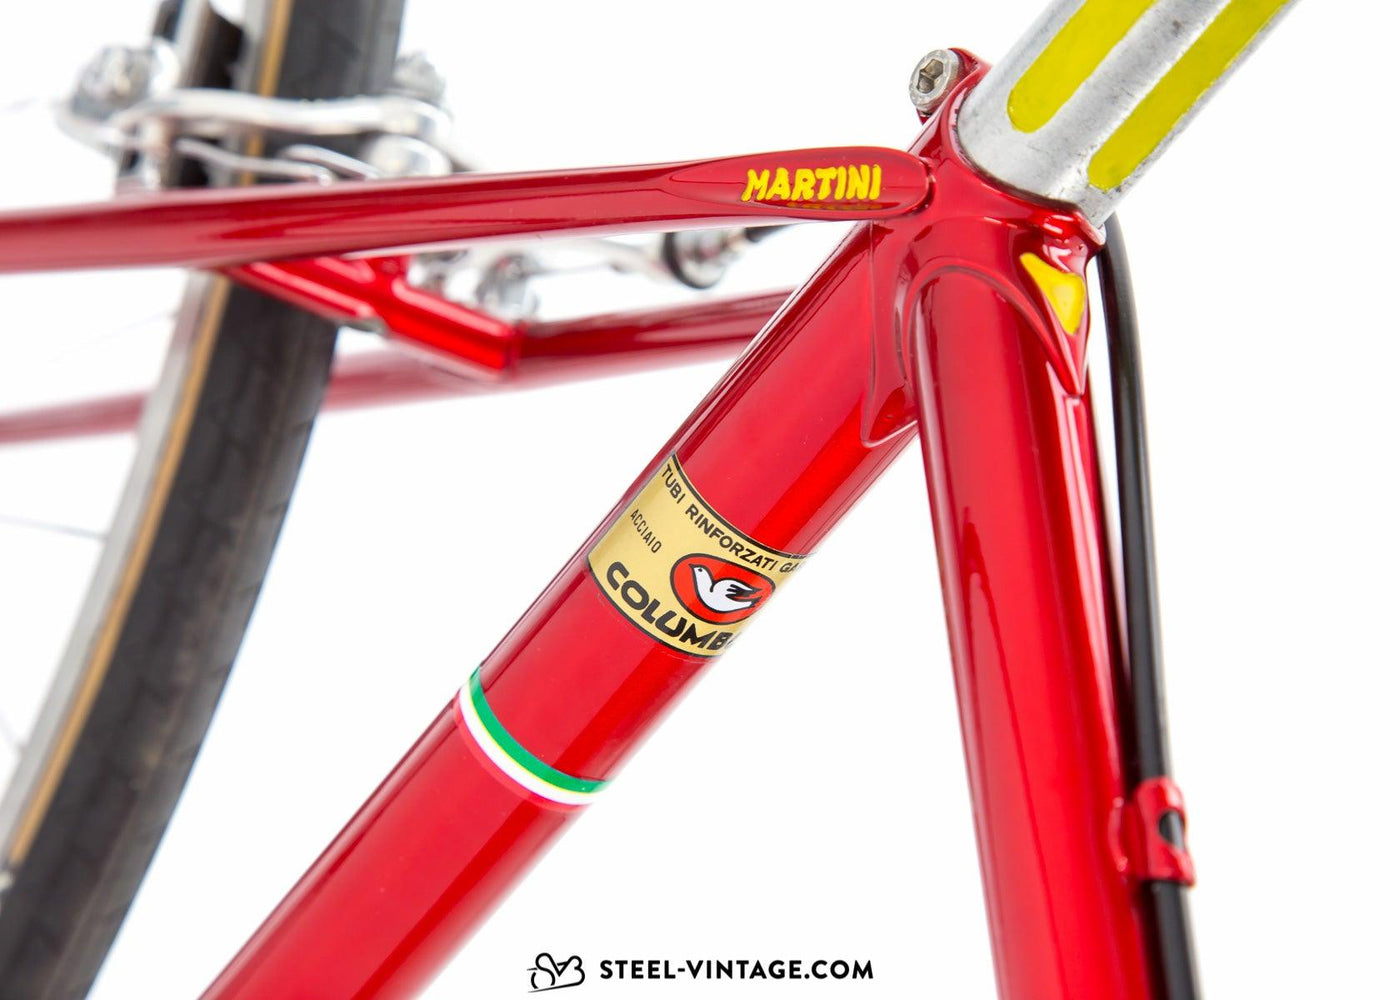 M. Martini Fine Pantographed Bicycle 1970s - Steel Vintage Bikes